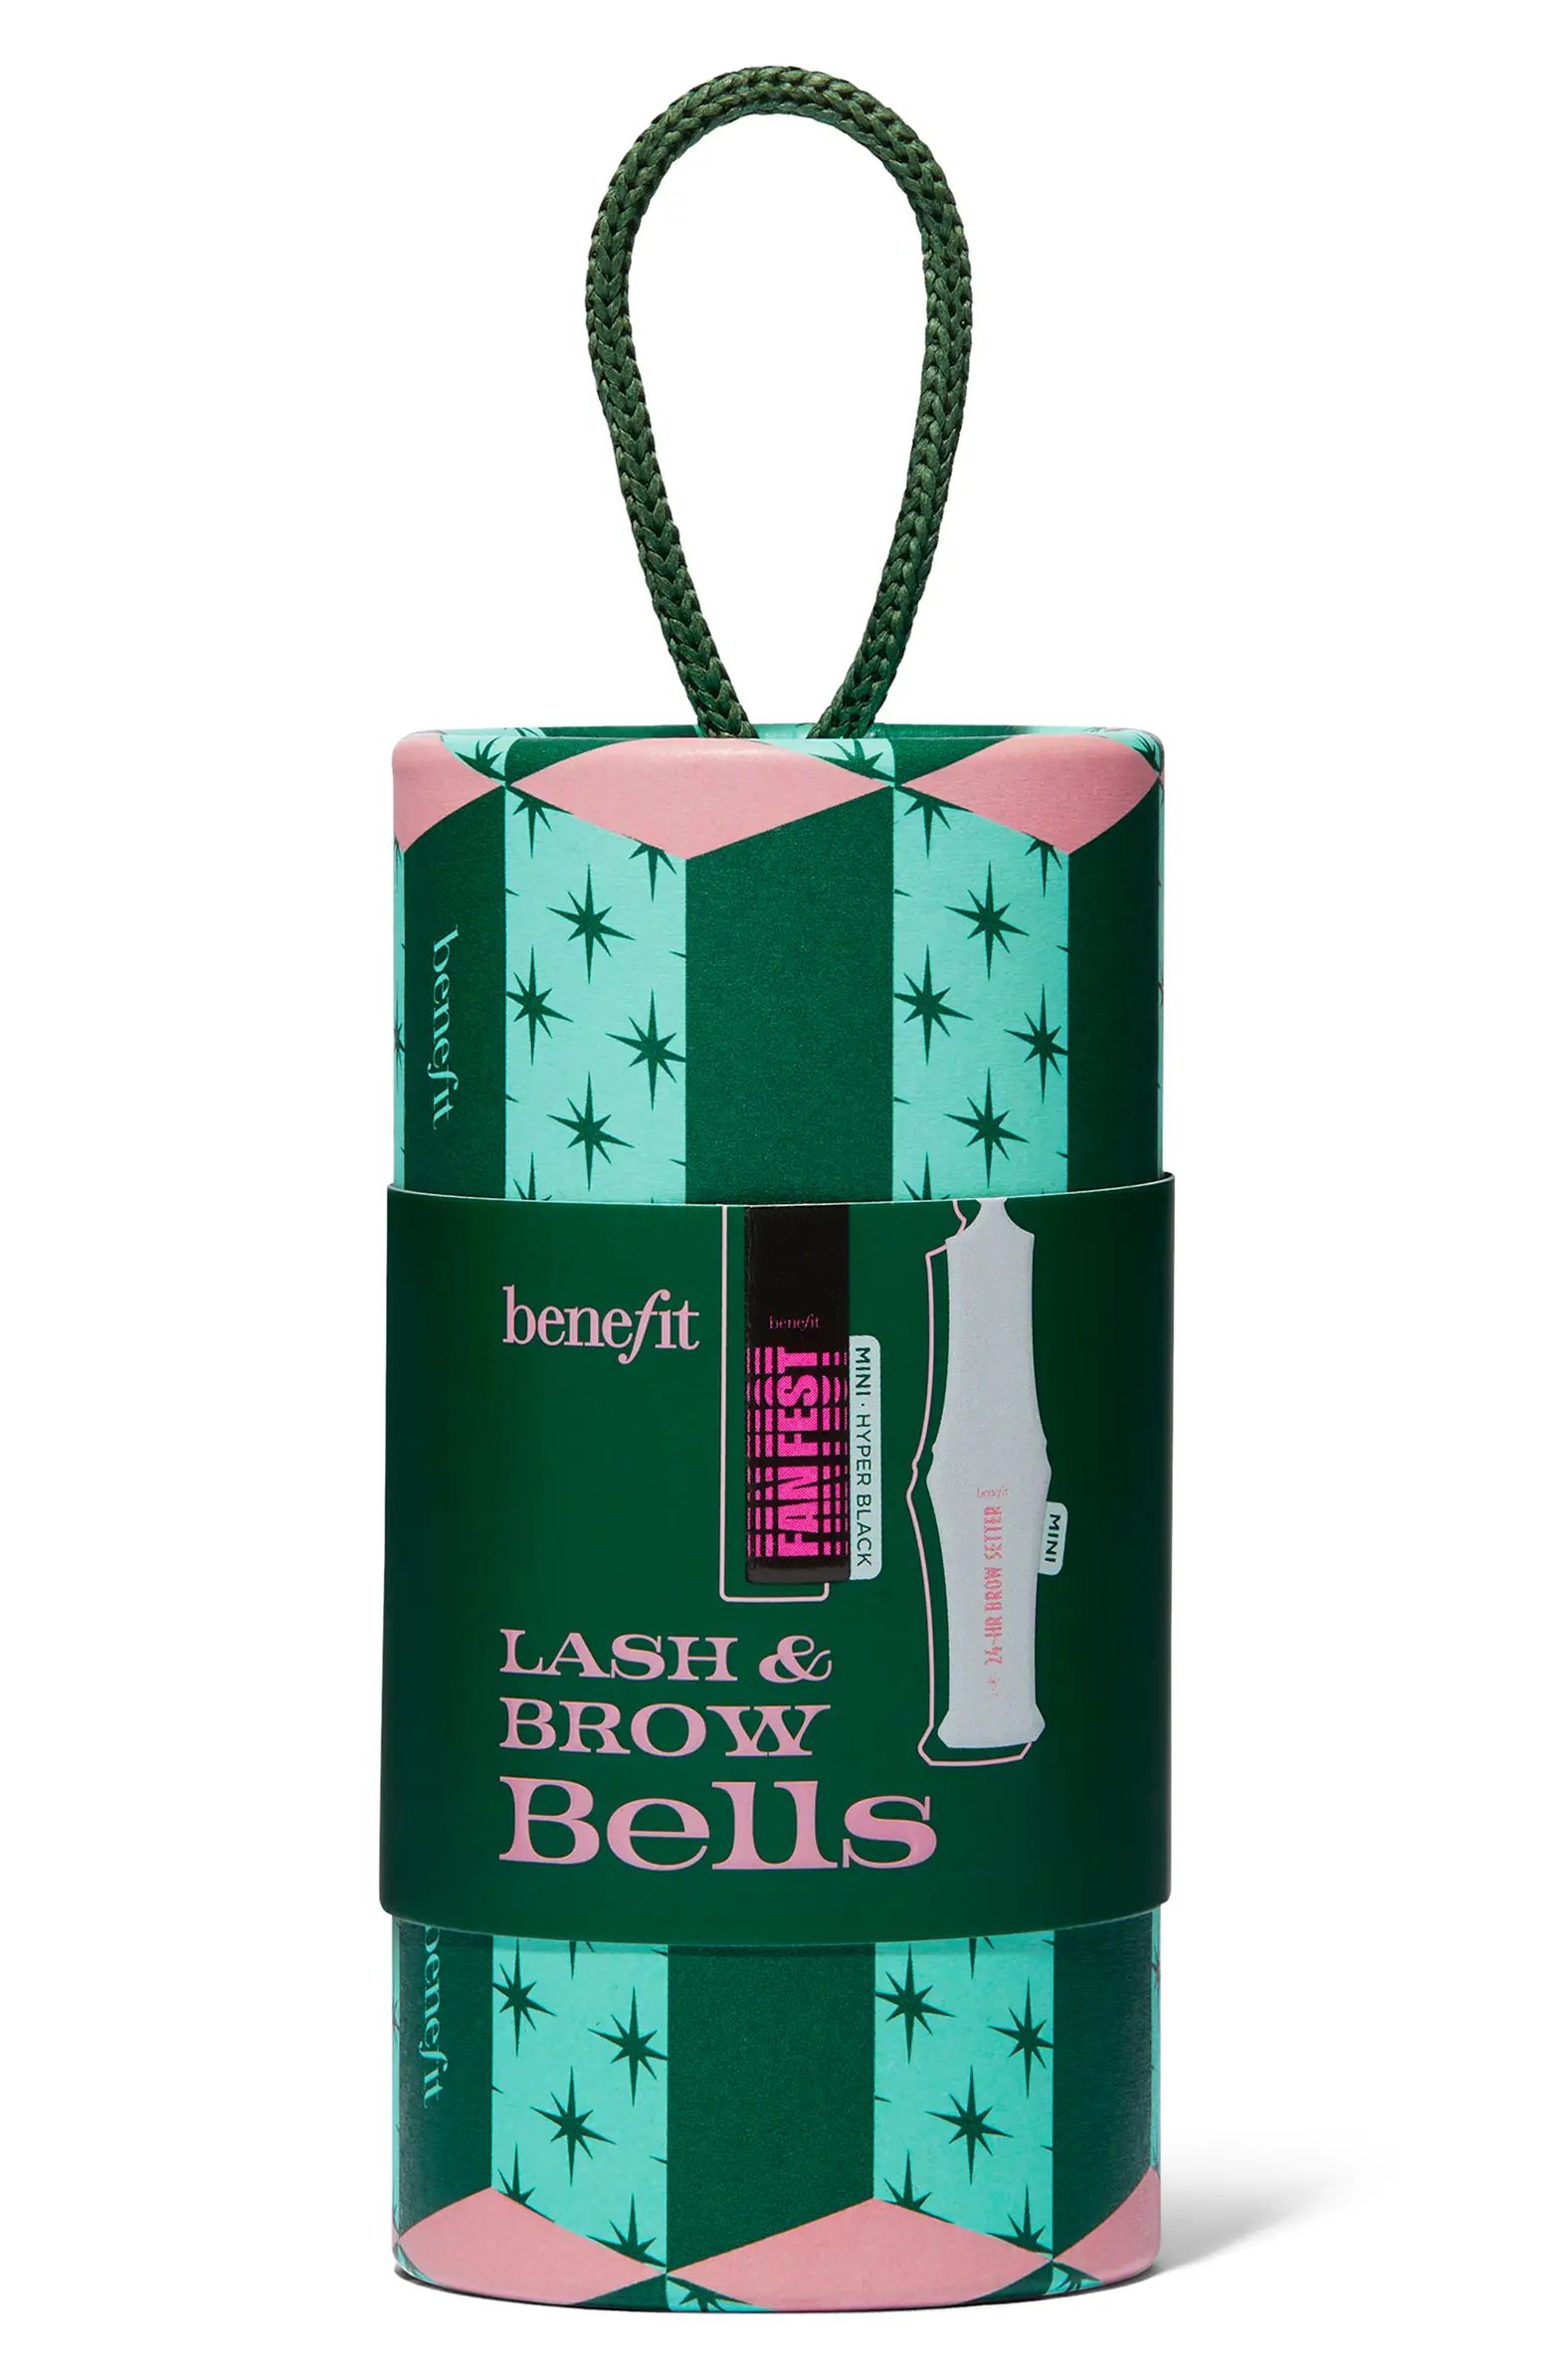 Benefit Cosmetics Lash & Brow Bells Gift Set (Limited Edition) $30 Value | Nordstrom | Nordstrom